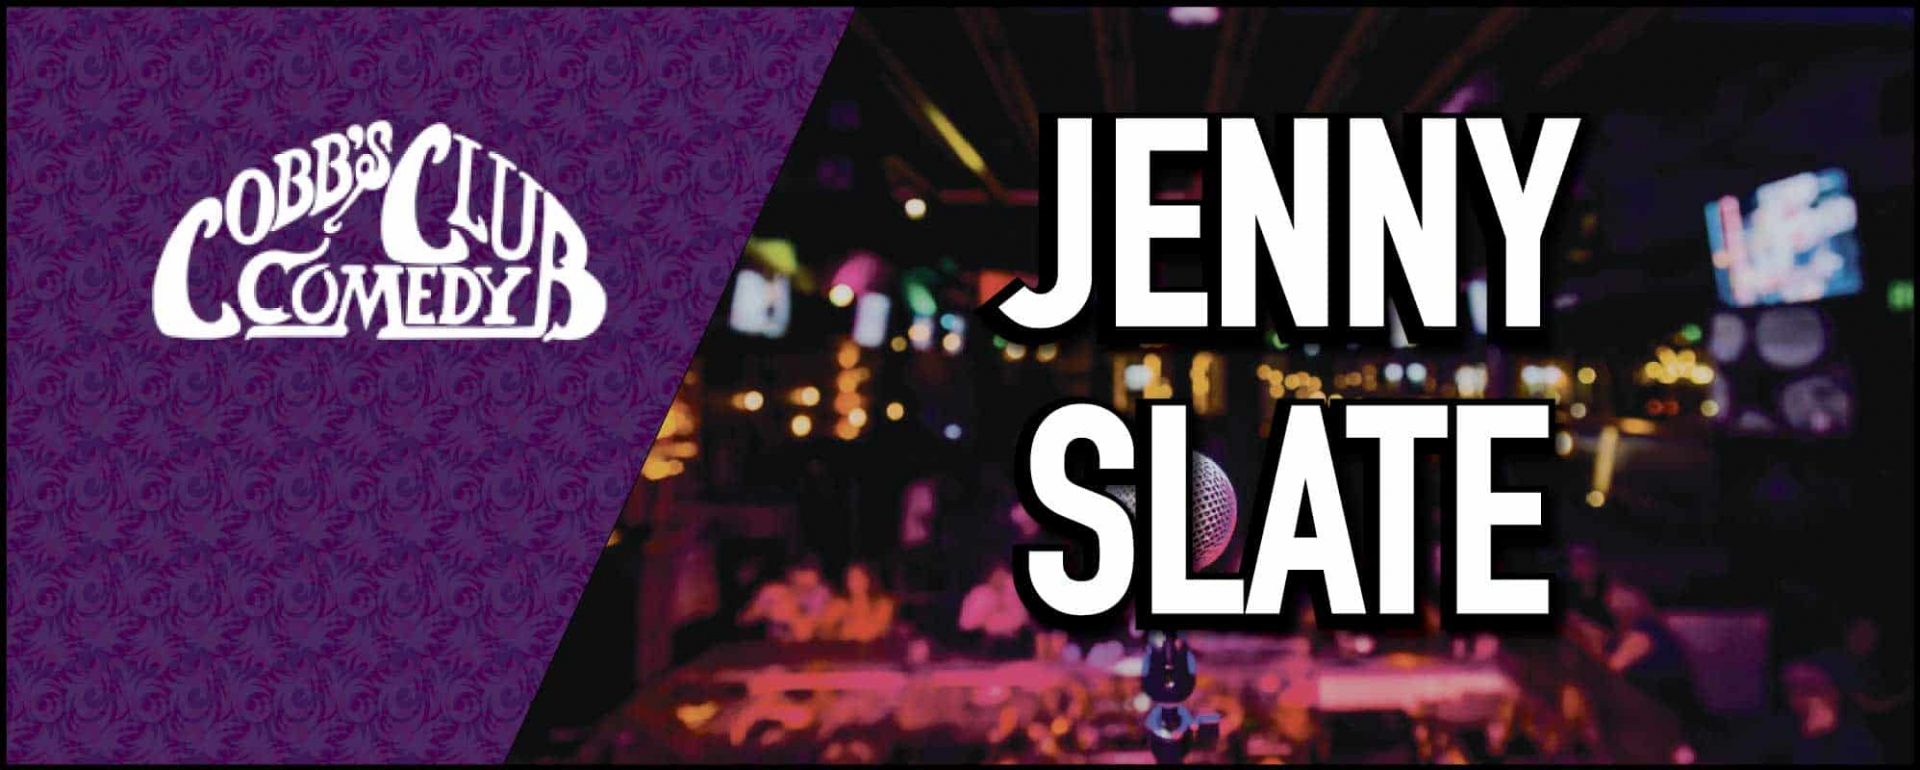 Jenny Slate at Cobbs Comedy Club